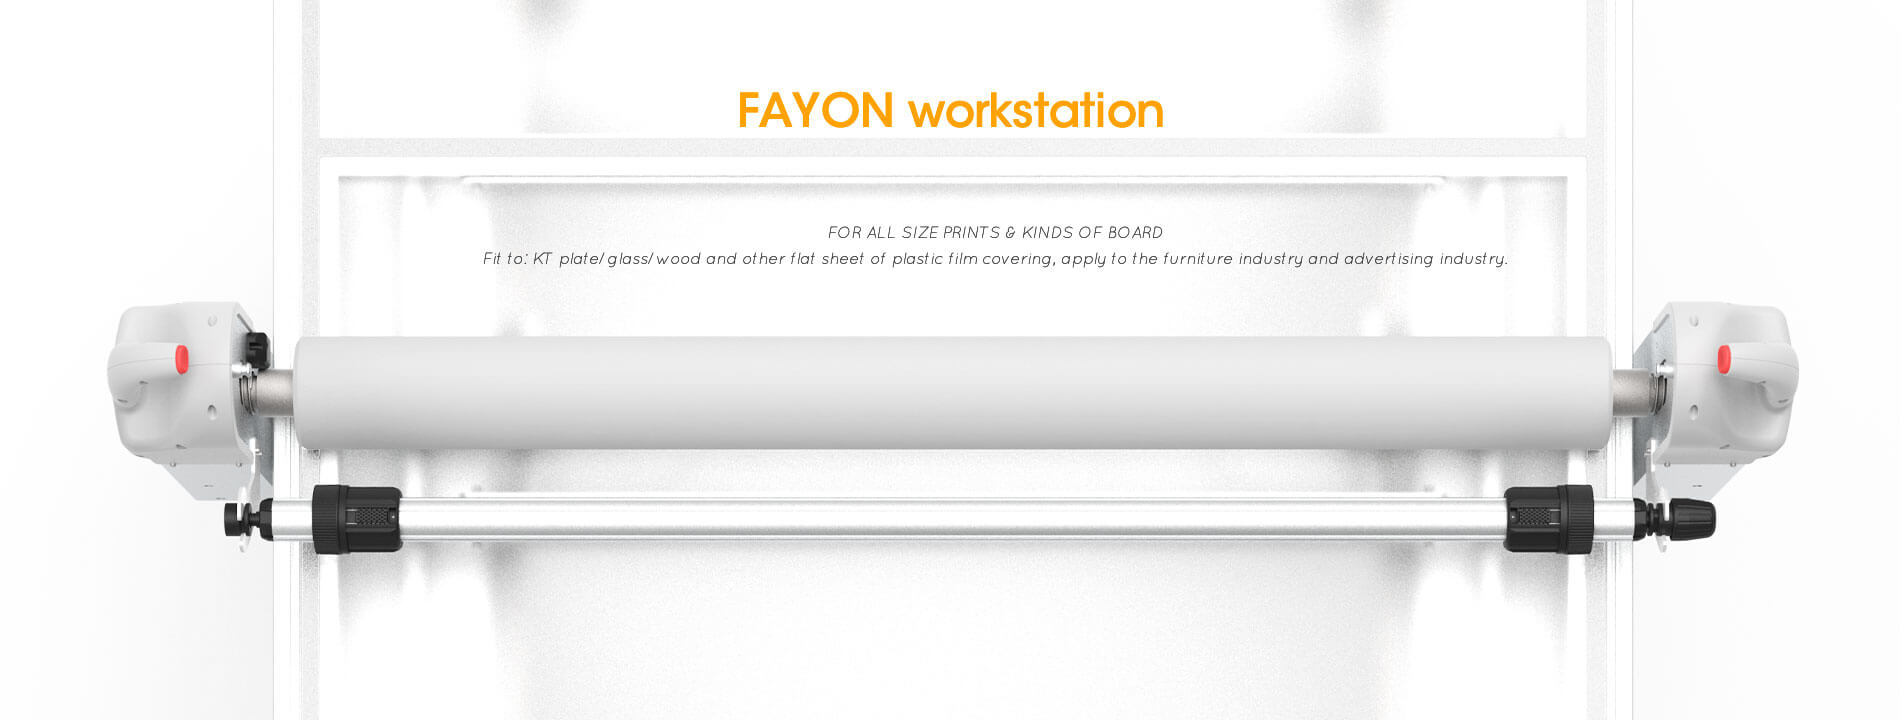 FAYON Flatbed Workstation